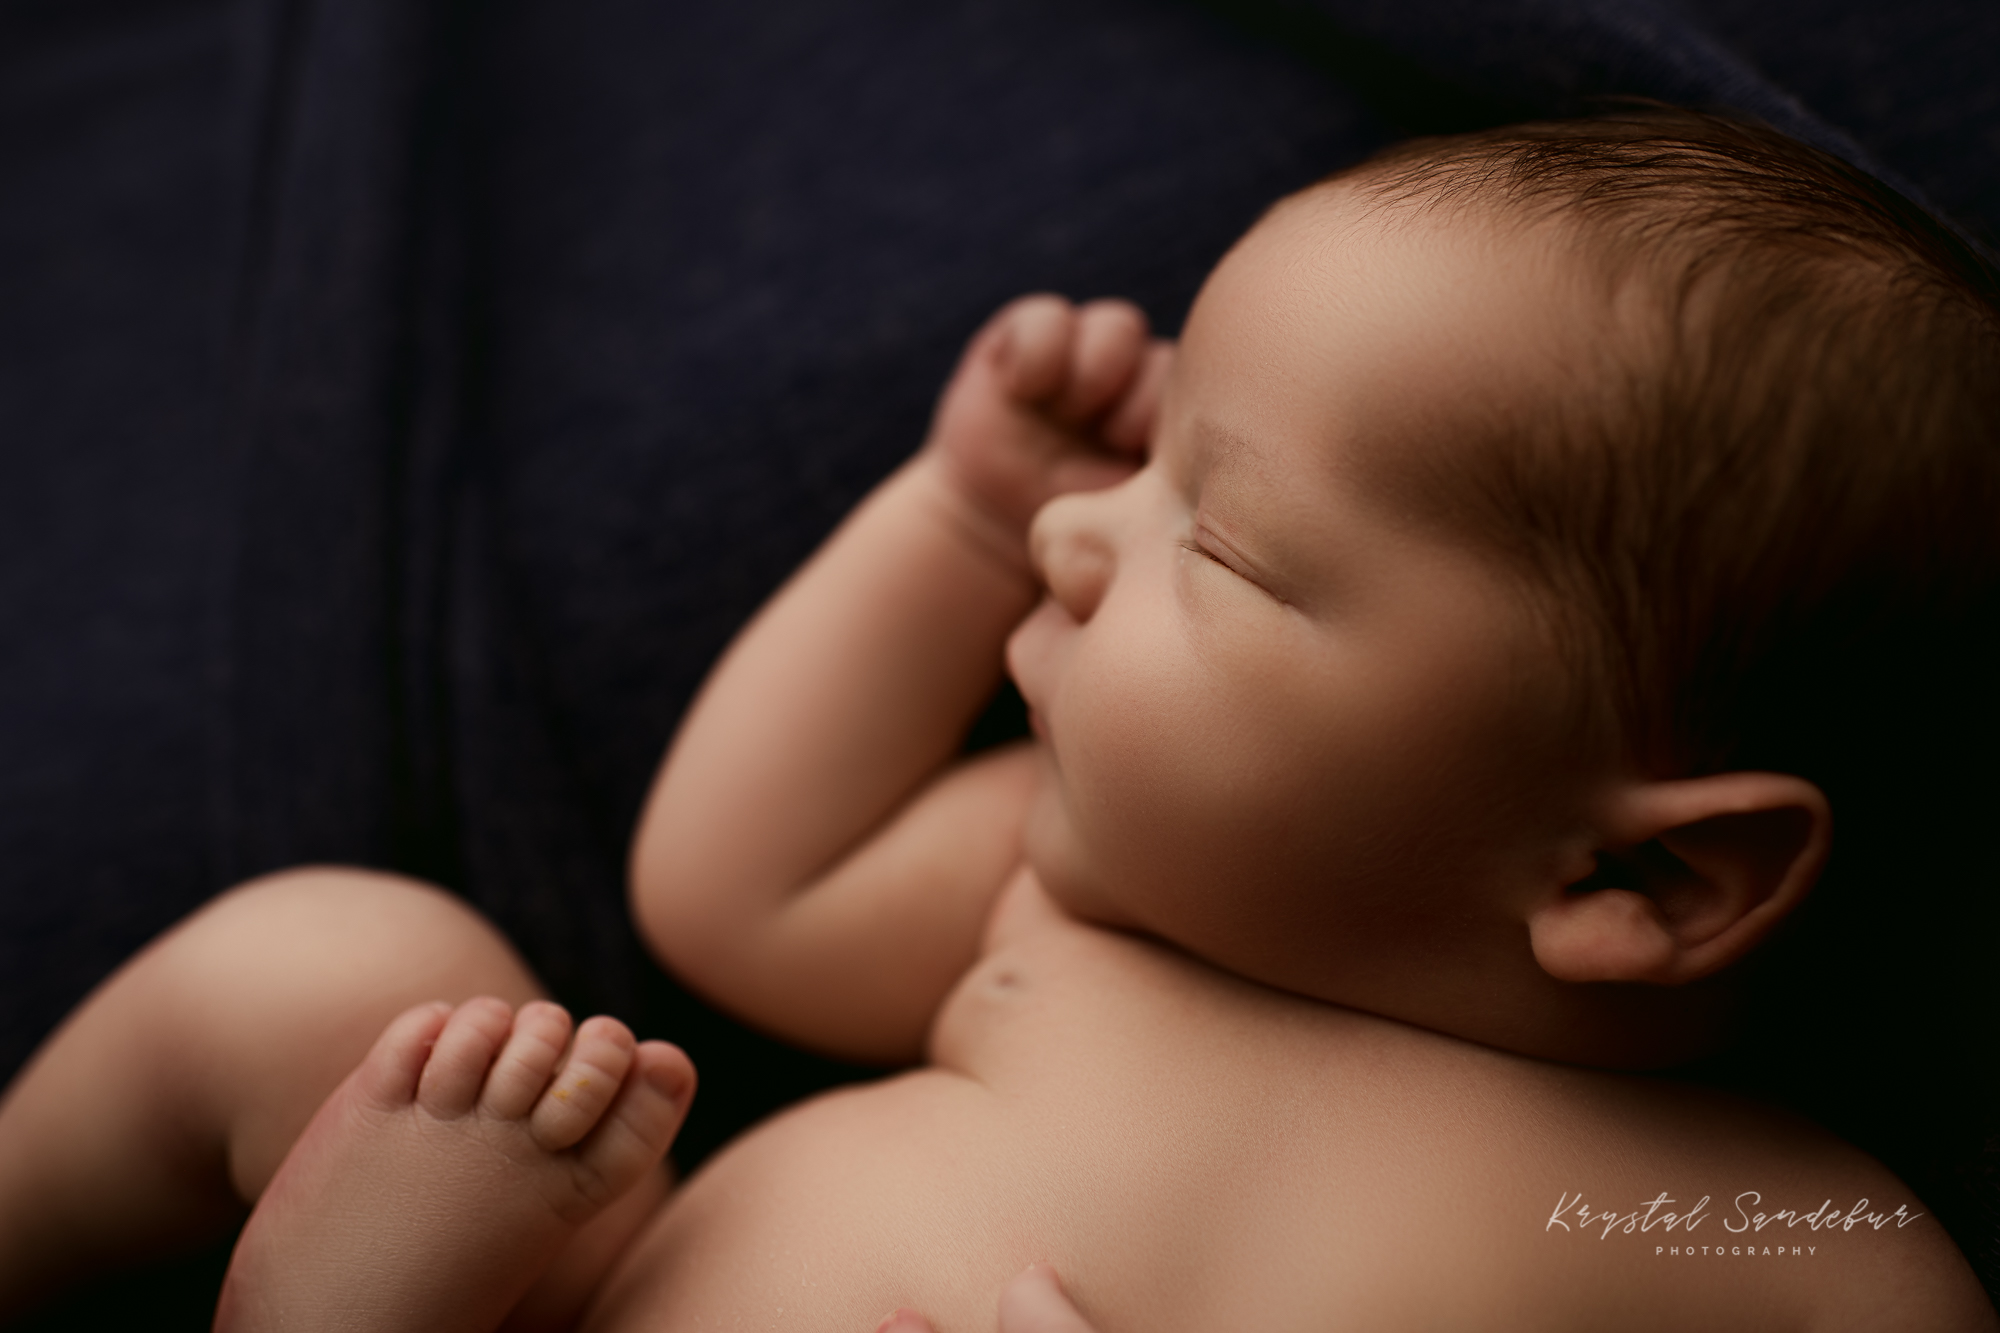 dfw newborn photographer